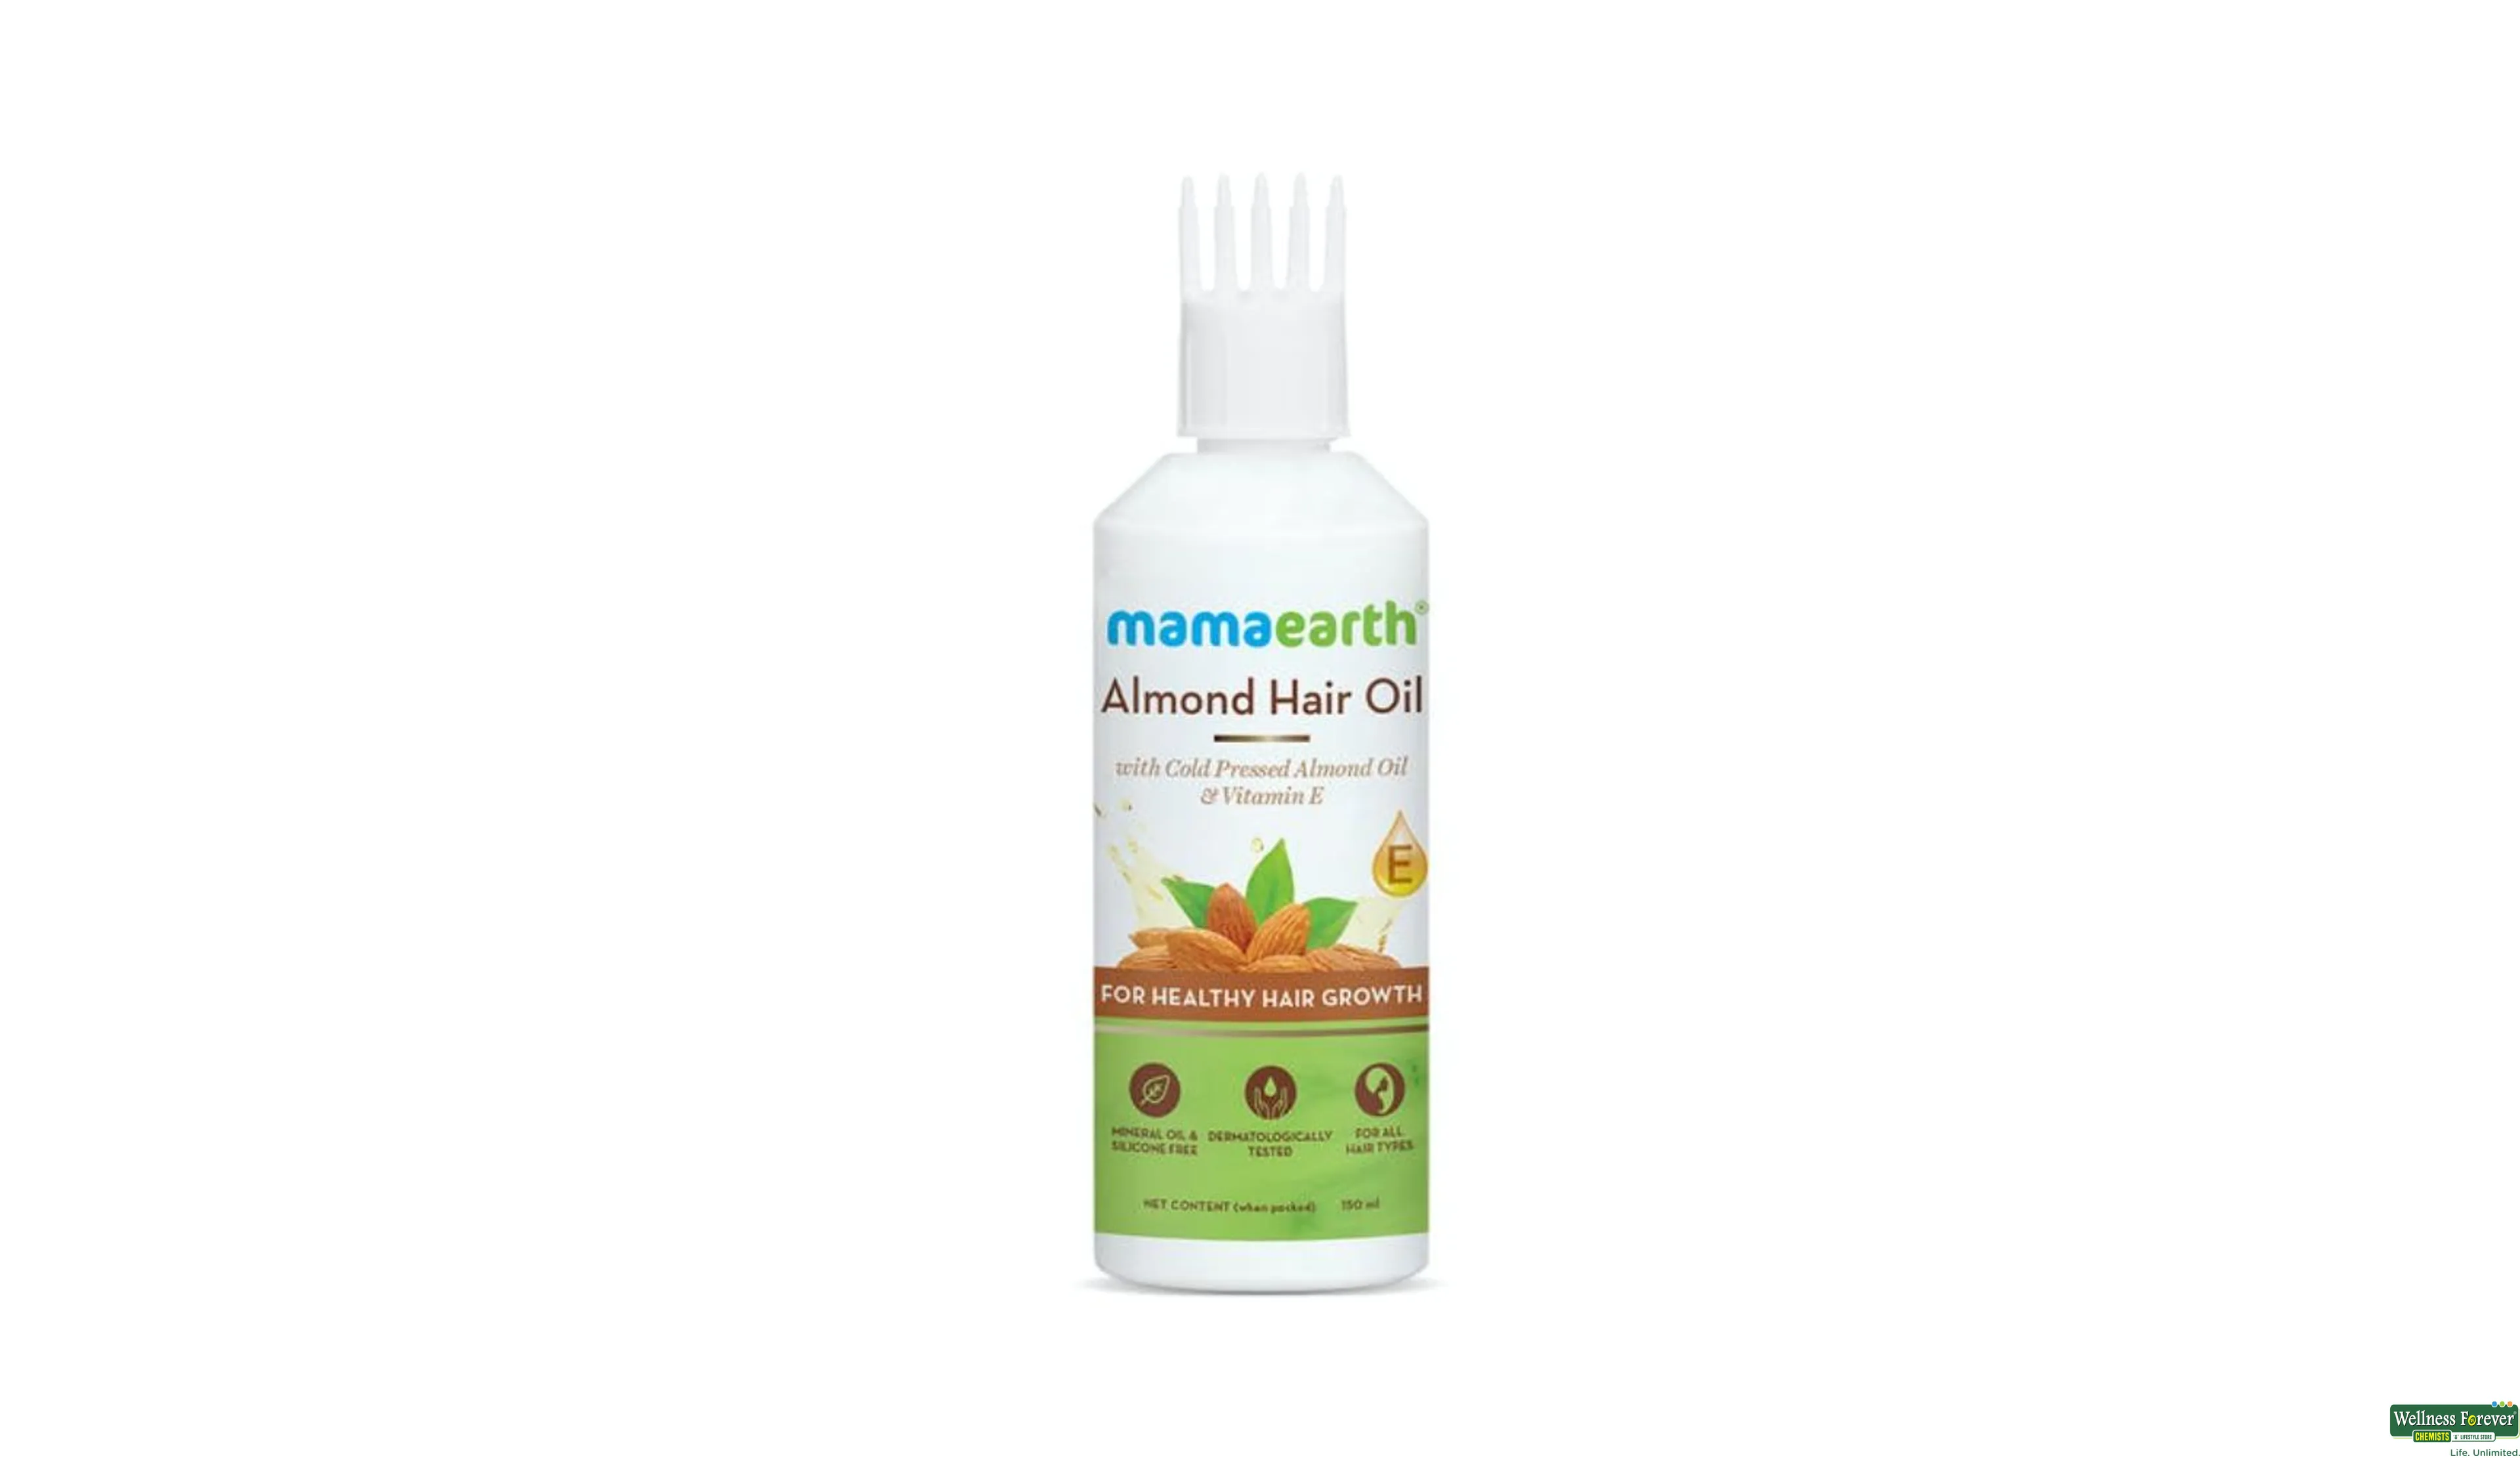 Natural Forever Herbal Hair Oil 150ml Online at Best Price, Hair Oils